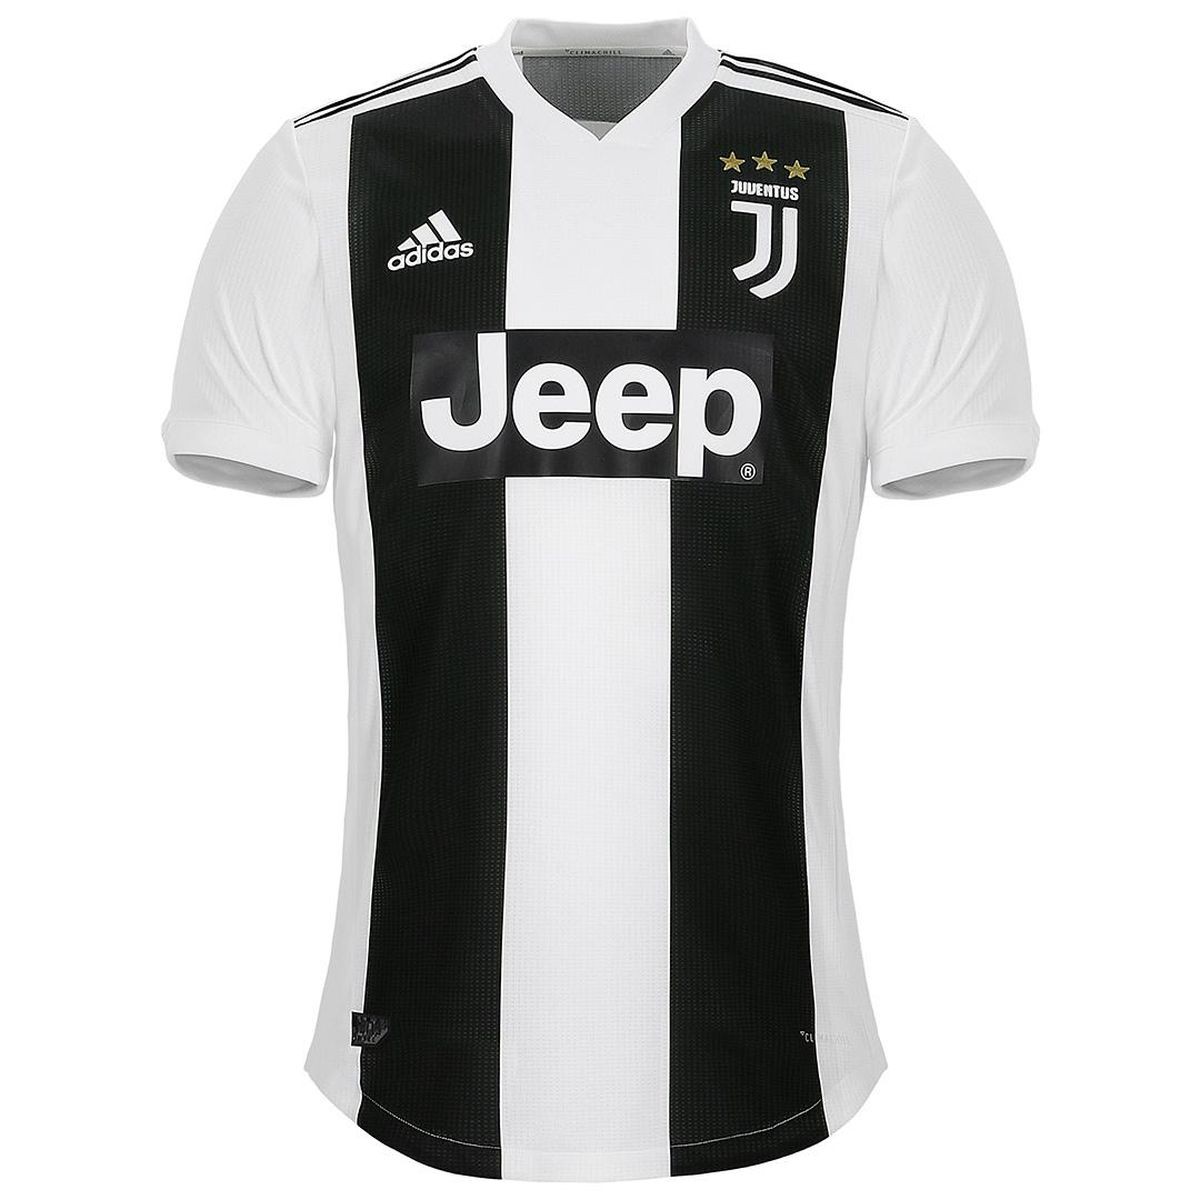 incrementar Sophie Masculinidad Playera Juventus Adidas Outlet - deportesinc.com 1688489939